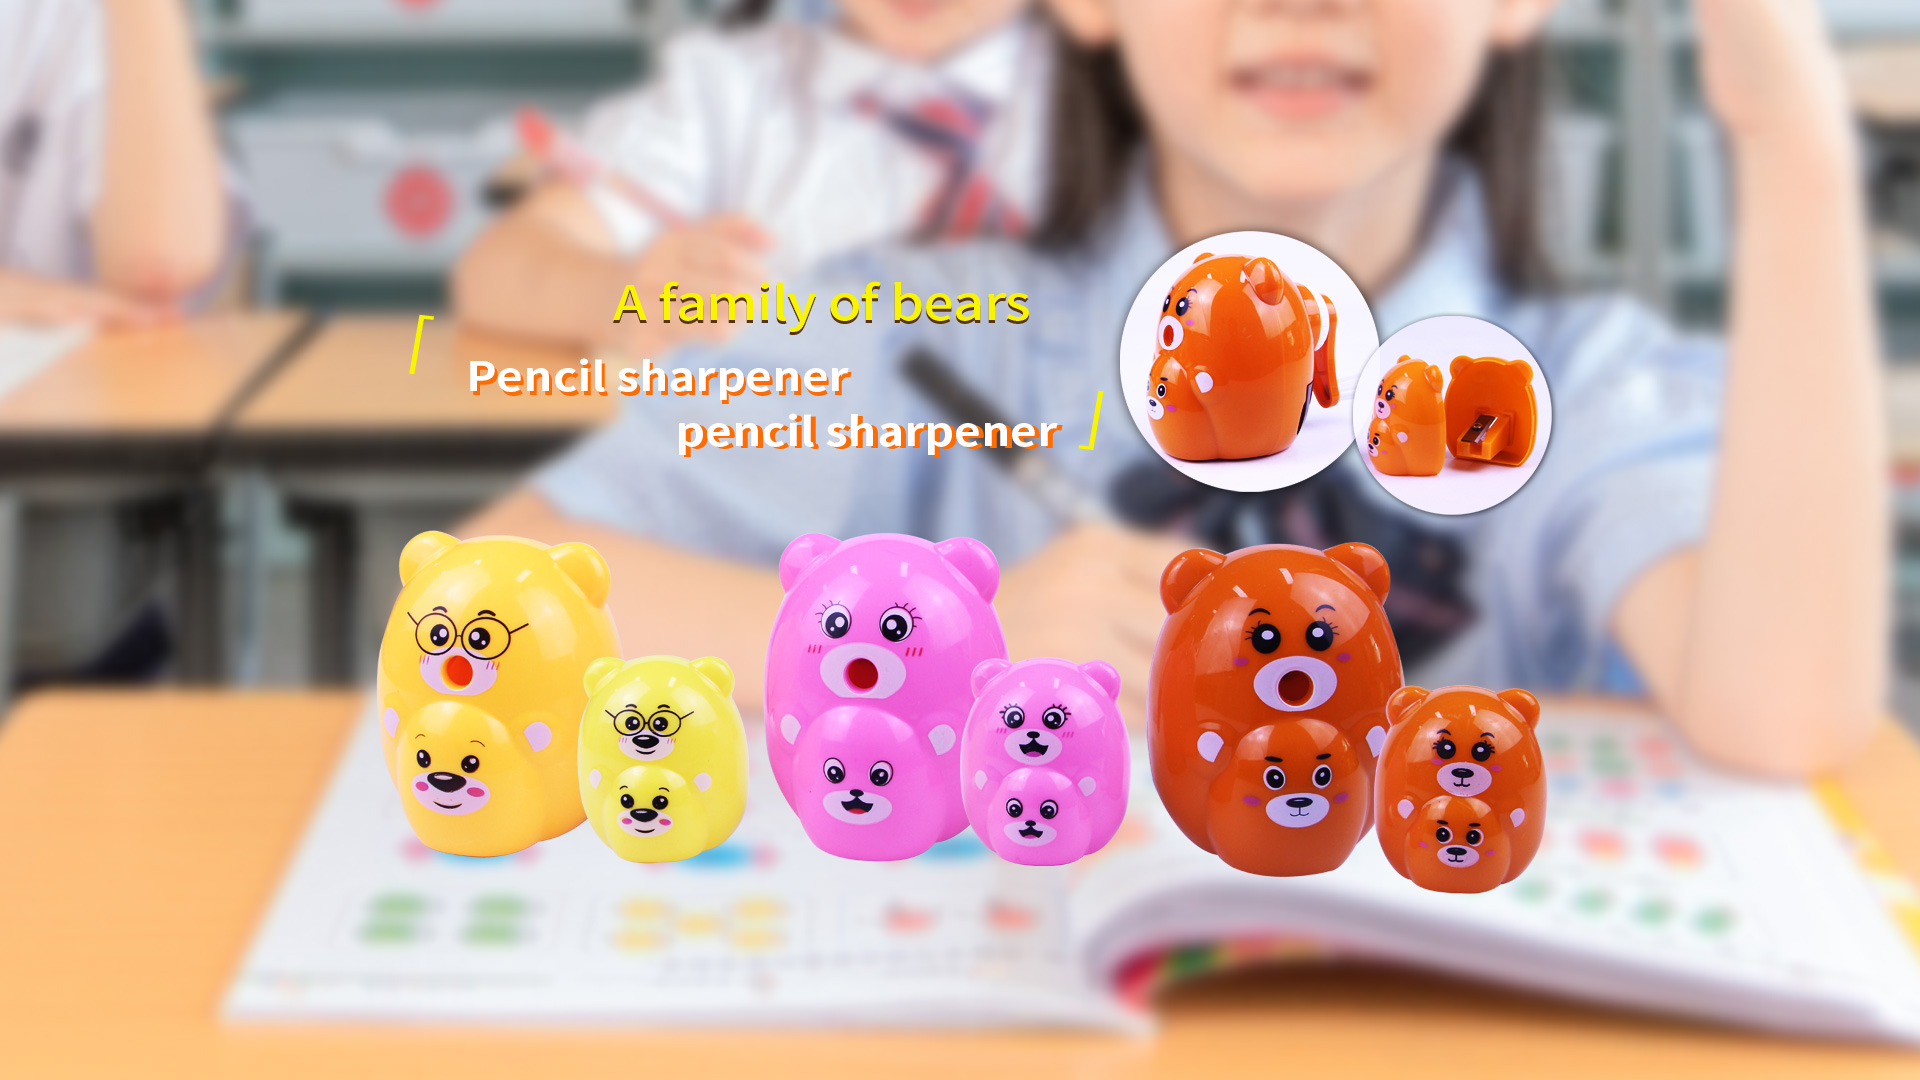 Pencil sharpener + pencil sharpener